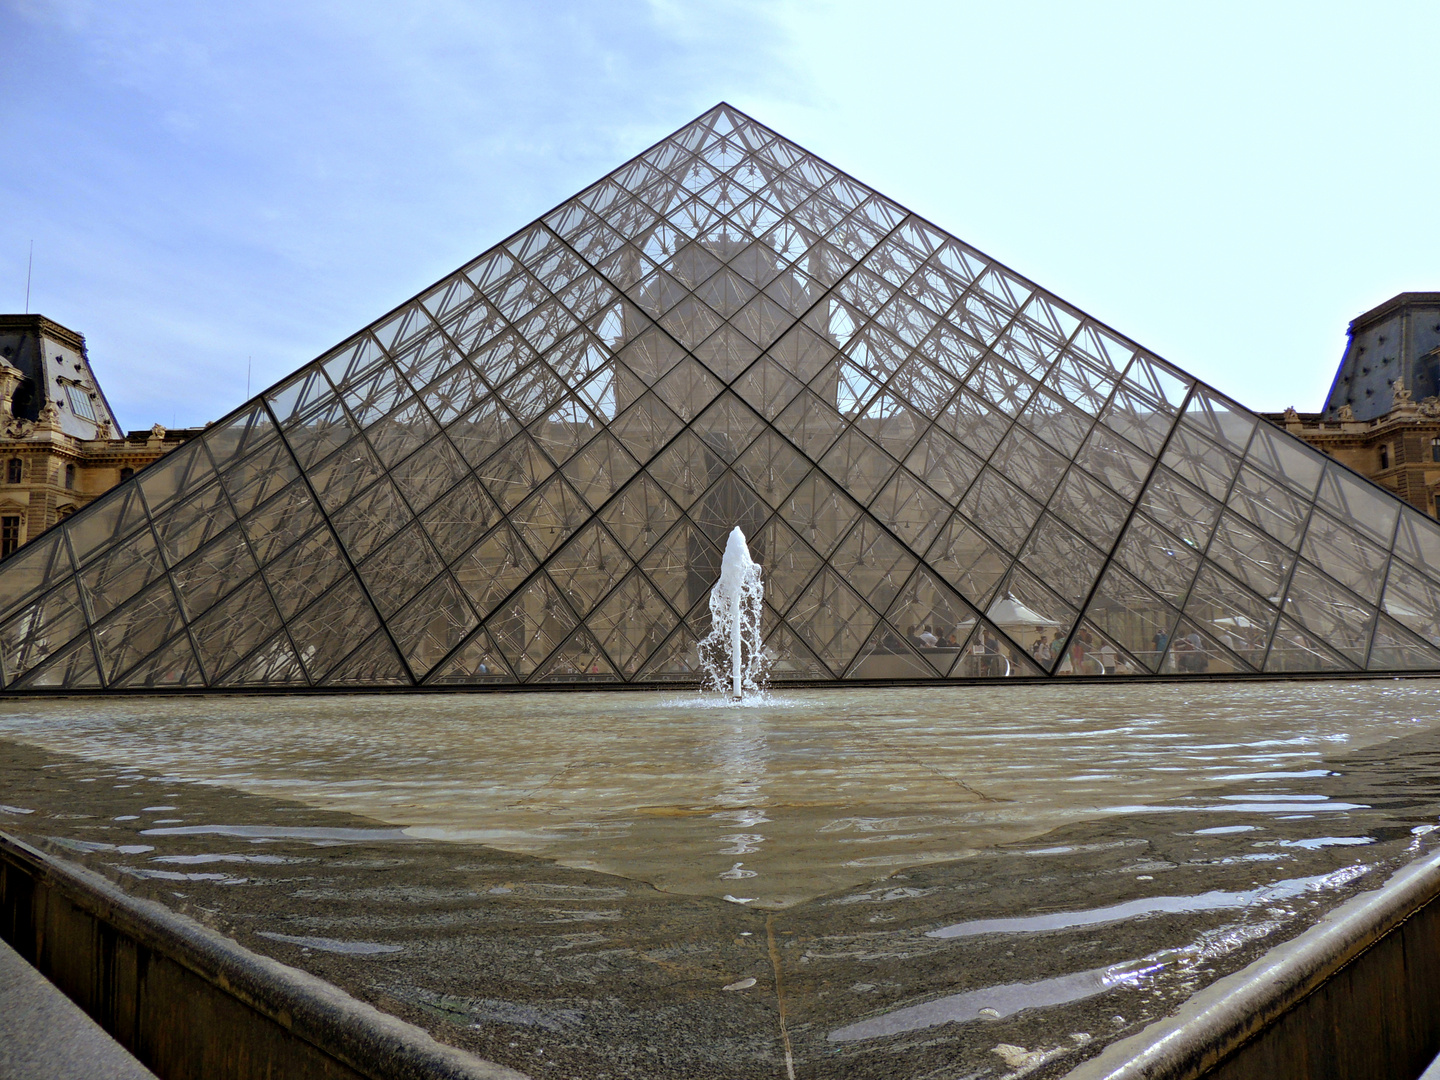 Glaspyramide im Innenhof des Louvre